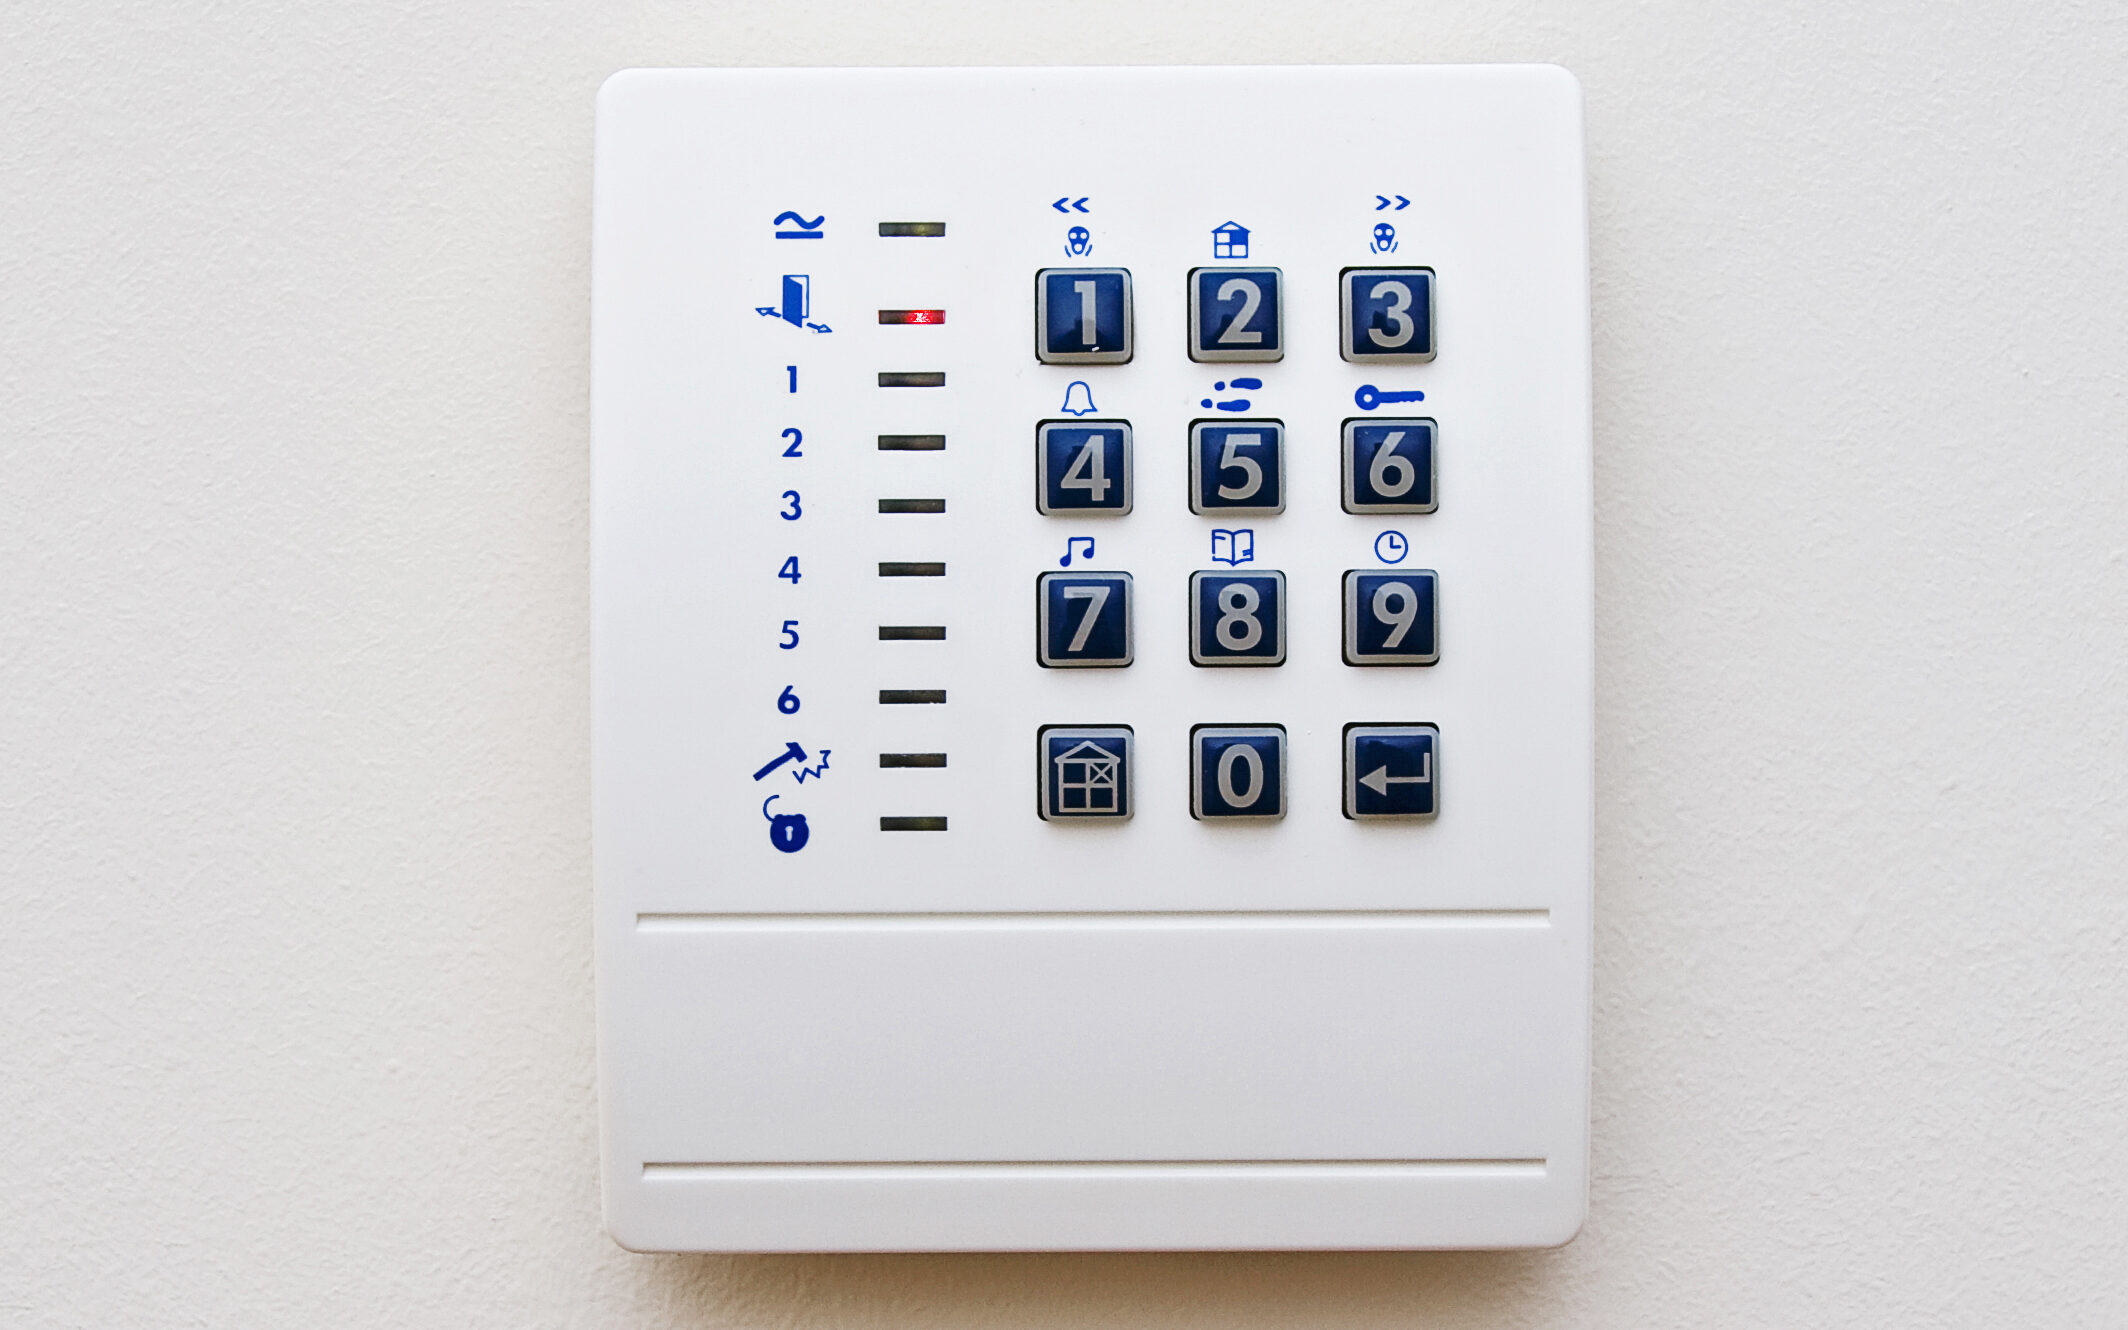 Picture of a house burglar alarm